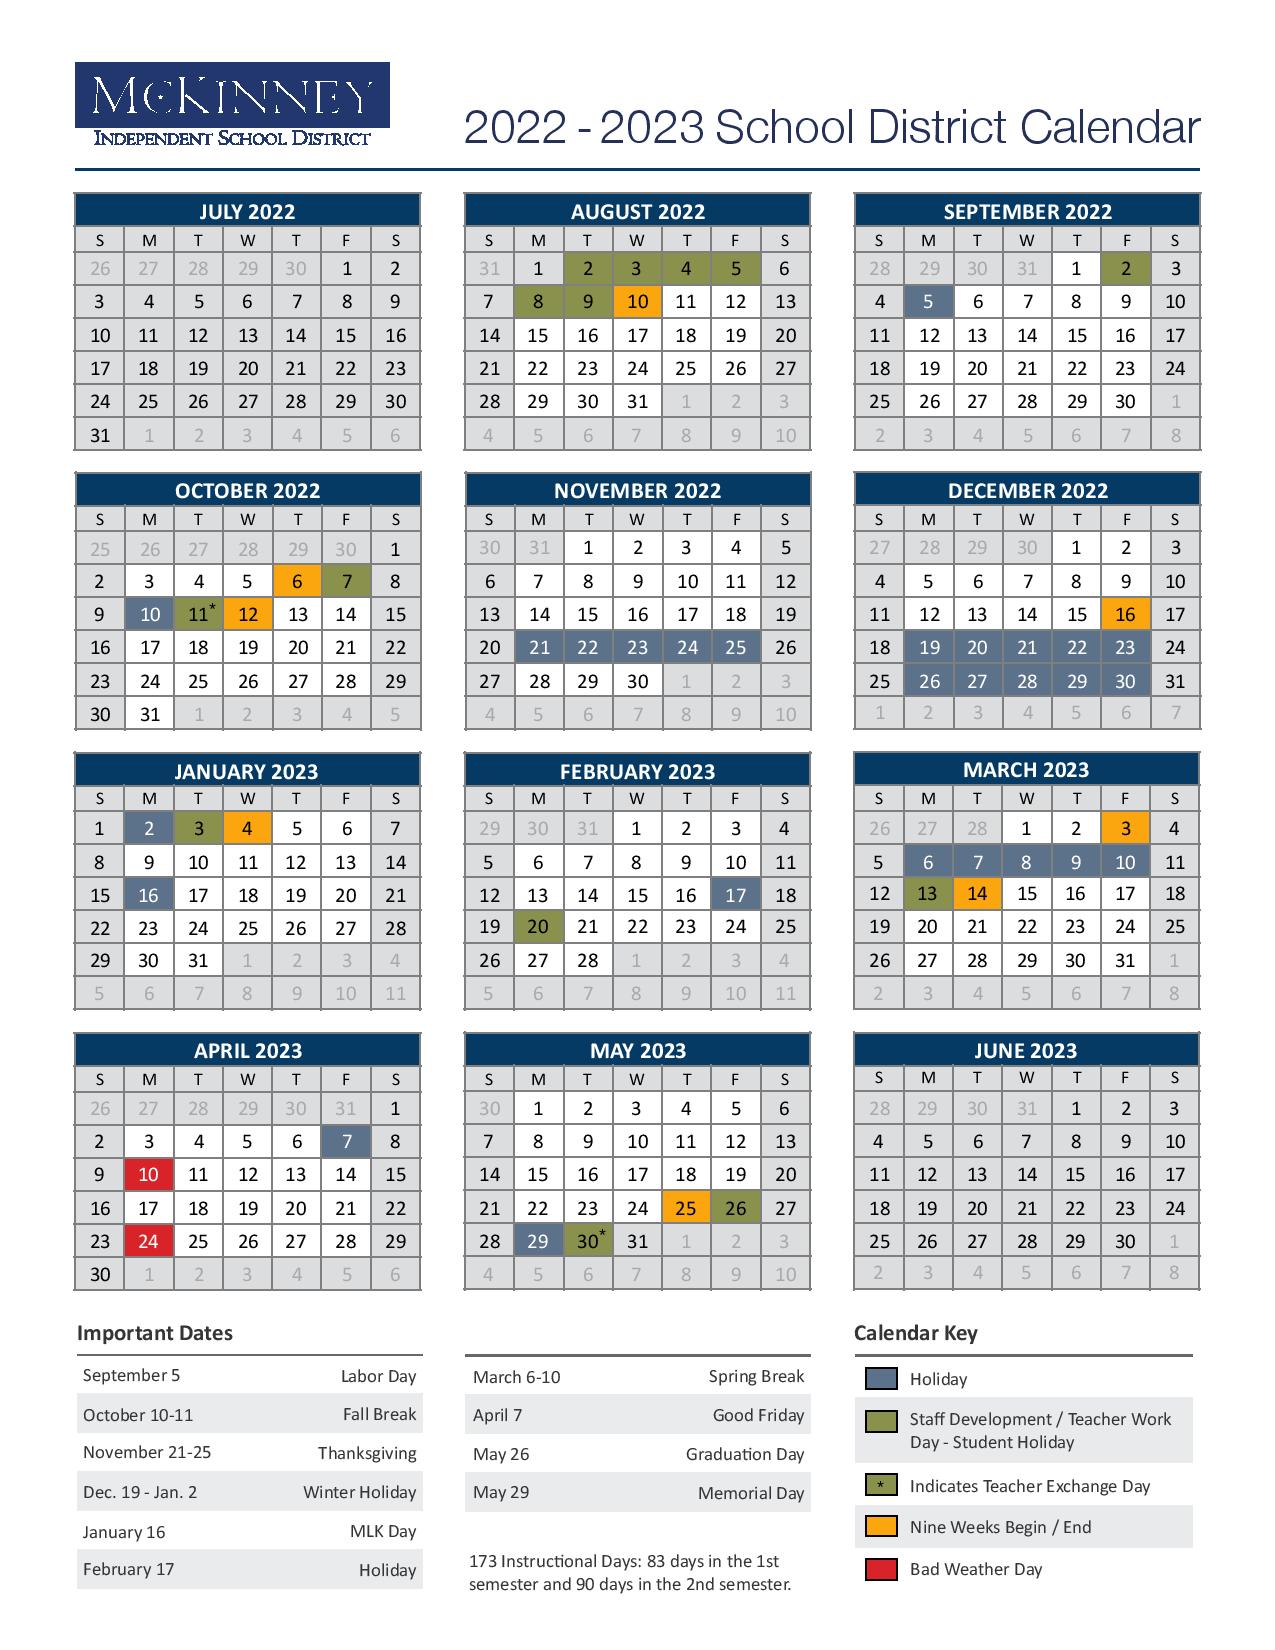 McKinney Independent School District Calendar 2022-2023